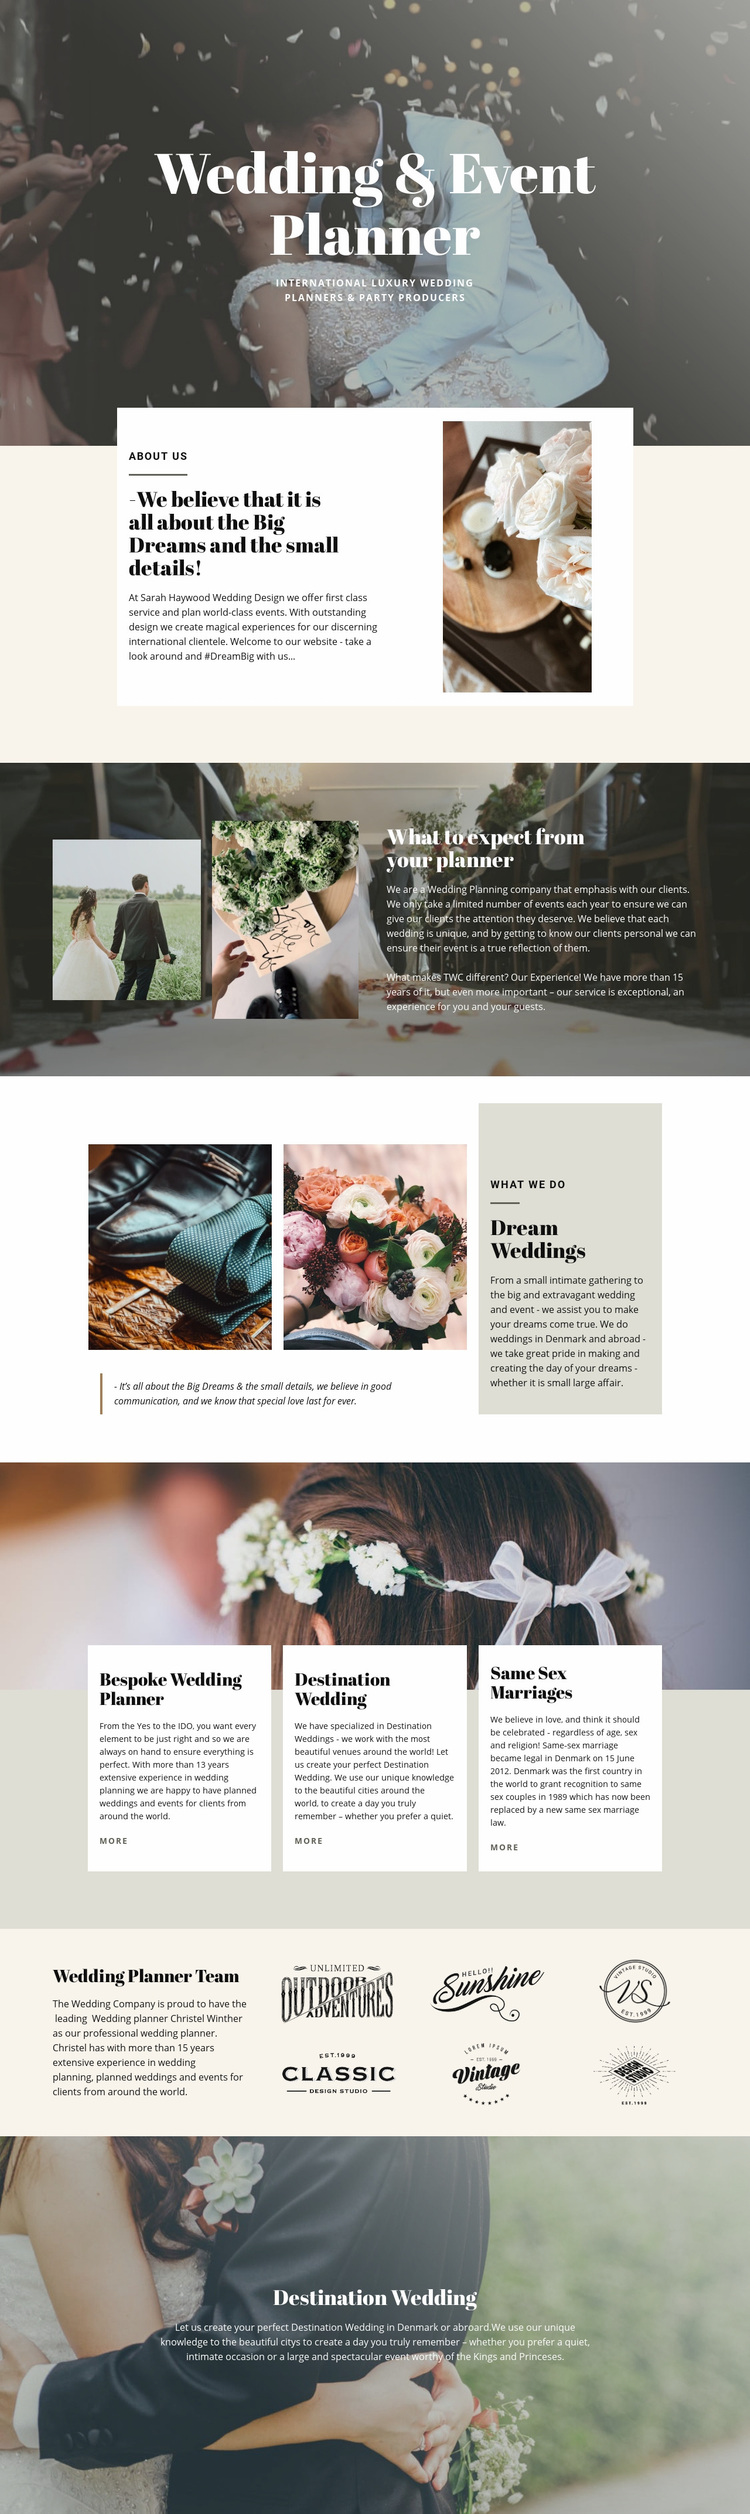 Biggest dream wedding Web Page Designer